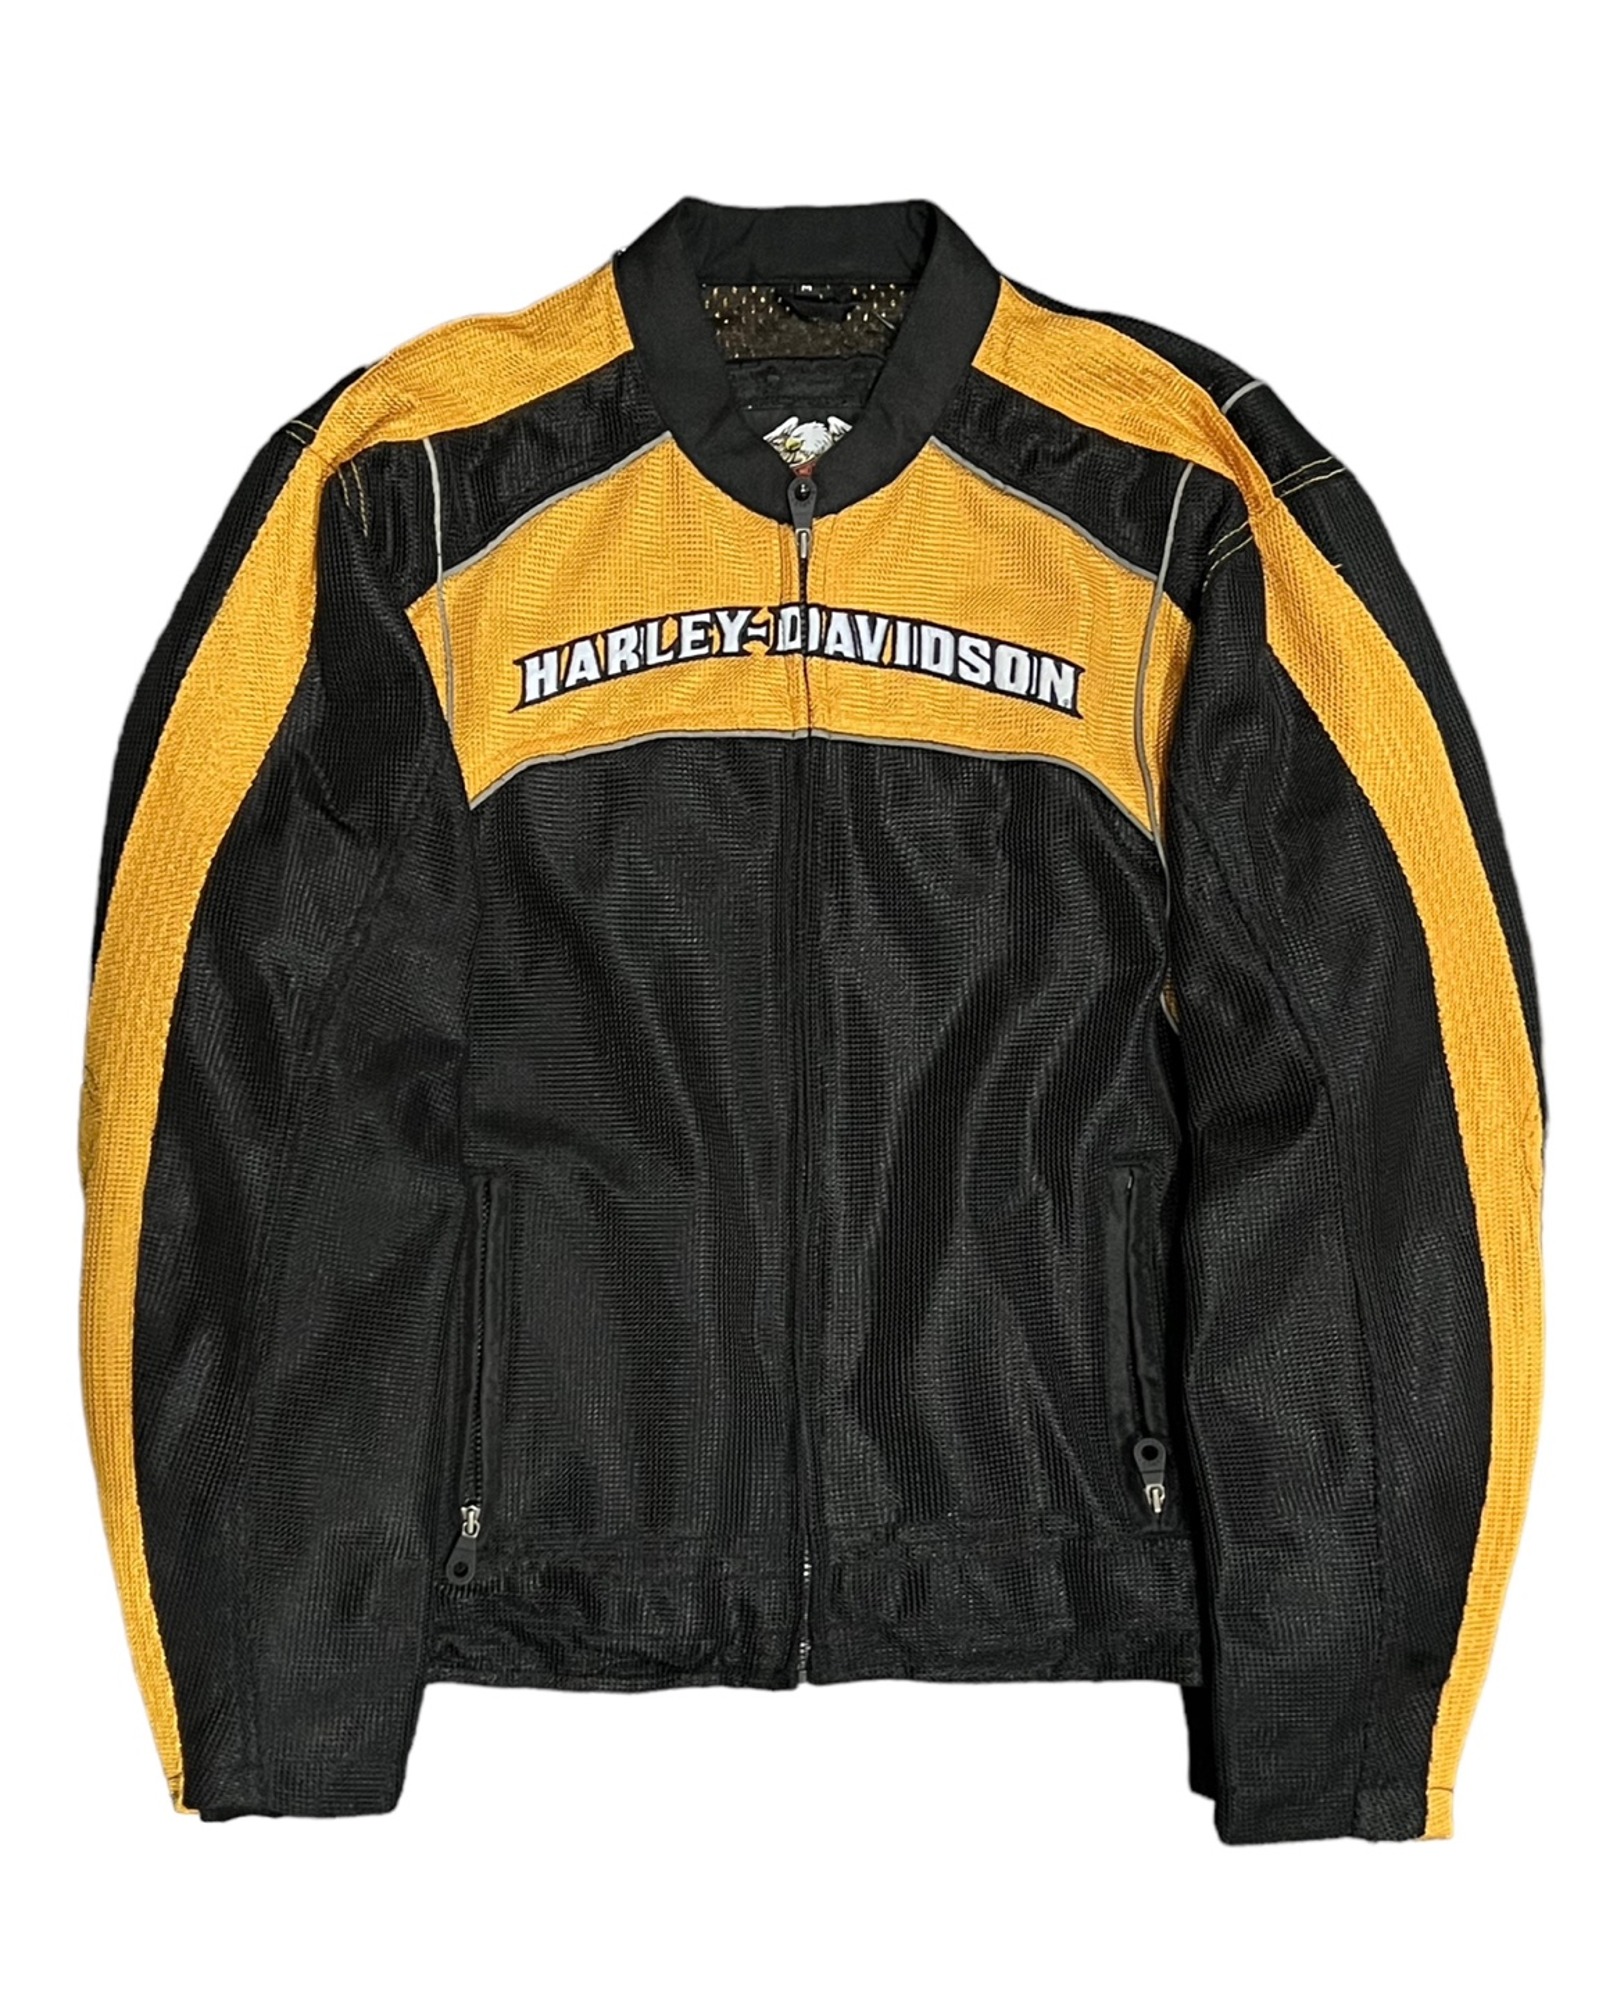 Harley-Davidson Racing Jacket